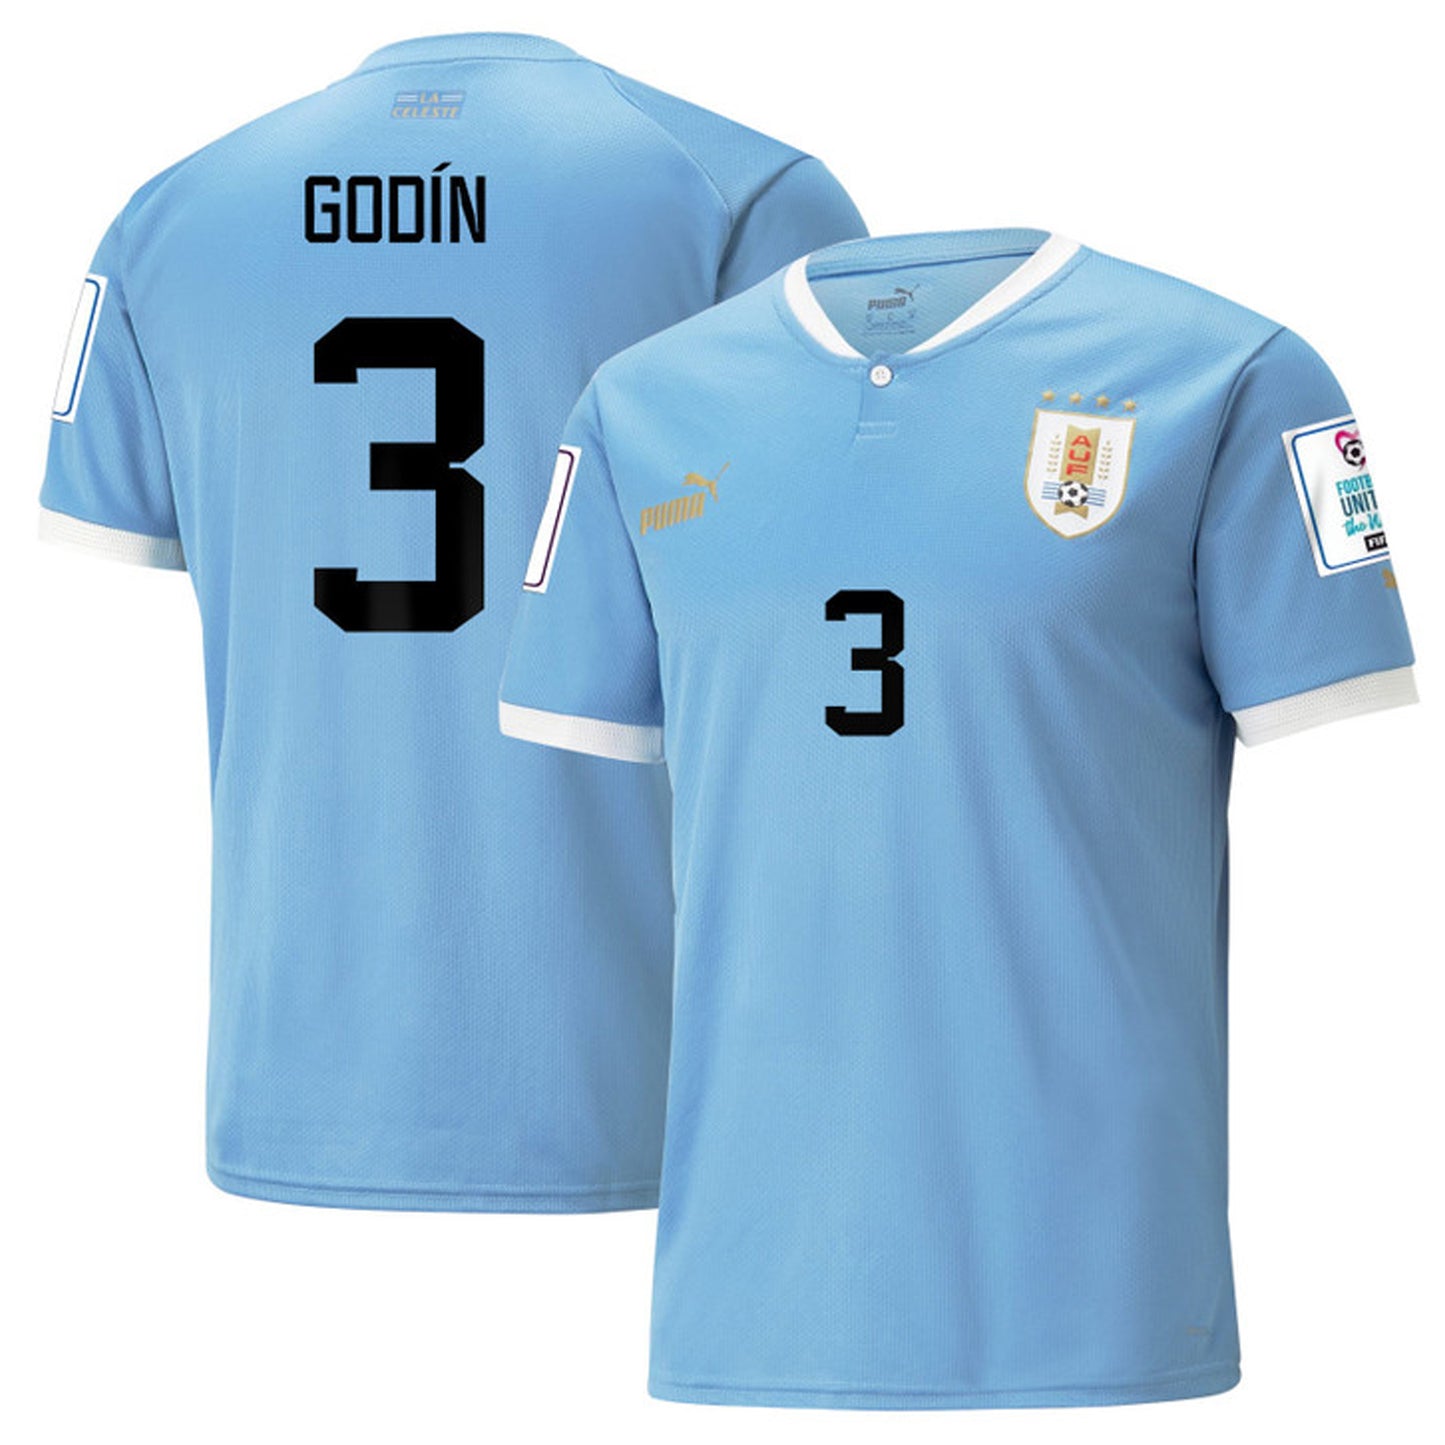 Diego Godín Uruguay 3 Fifa World Cup Jersey